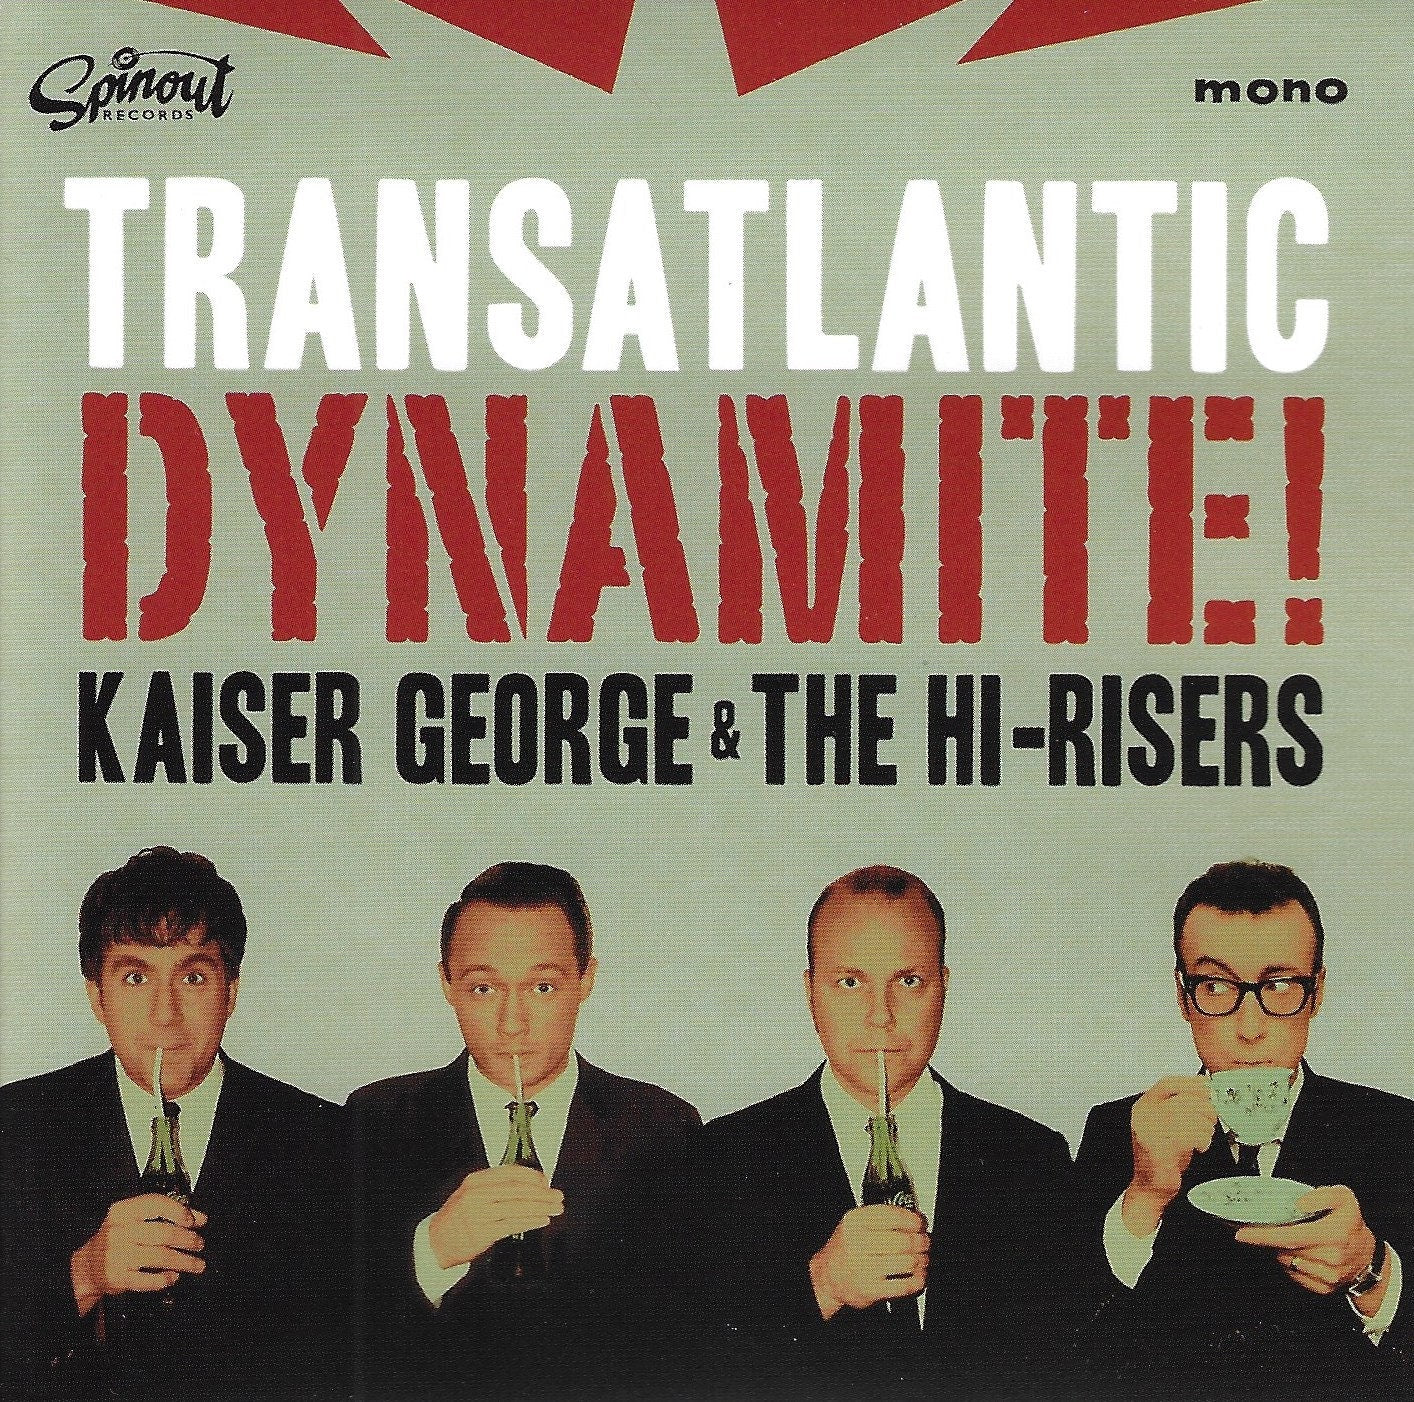 Kaiser George & The Hi-Risers "Transatlantic Dynamite" CD